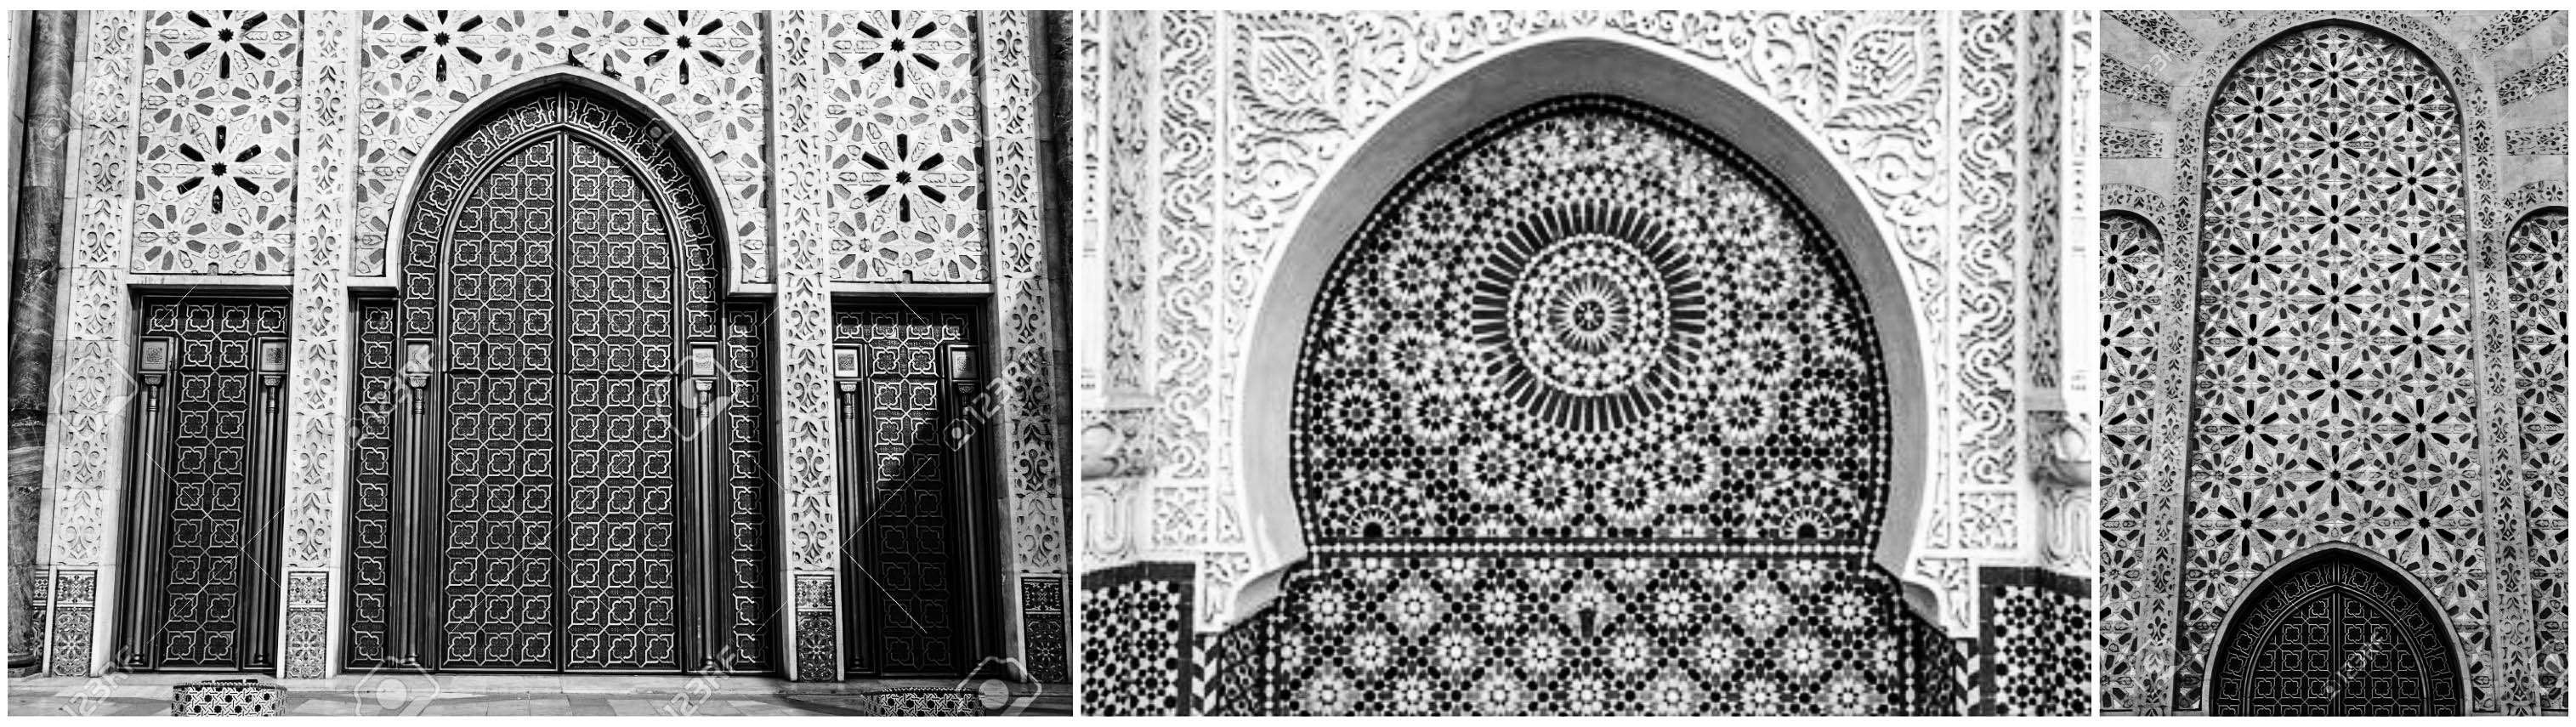 Ornamen masjid yang menarik hati, penuh pesona. (Ilustrasi)